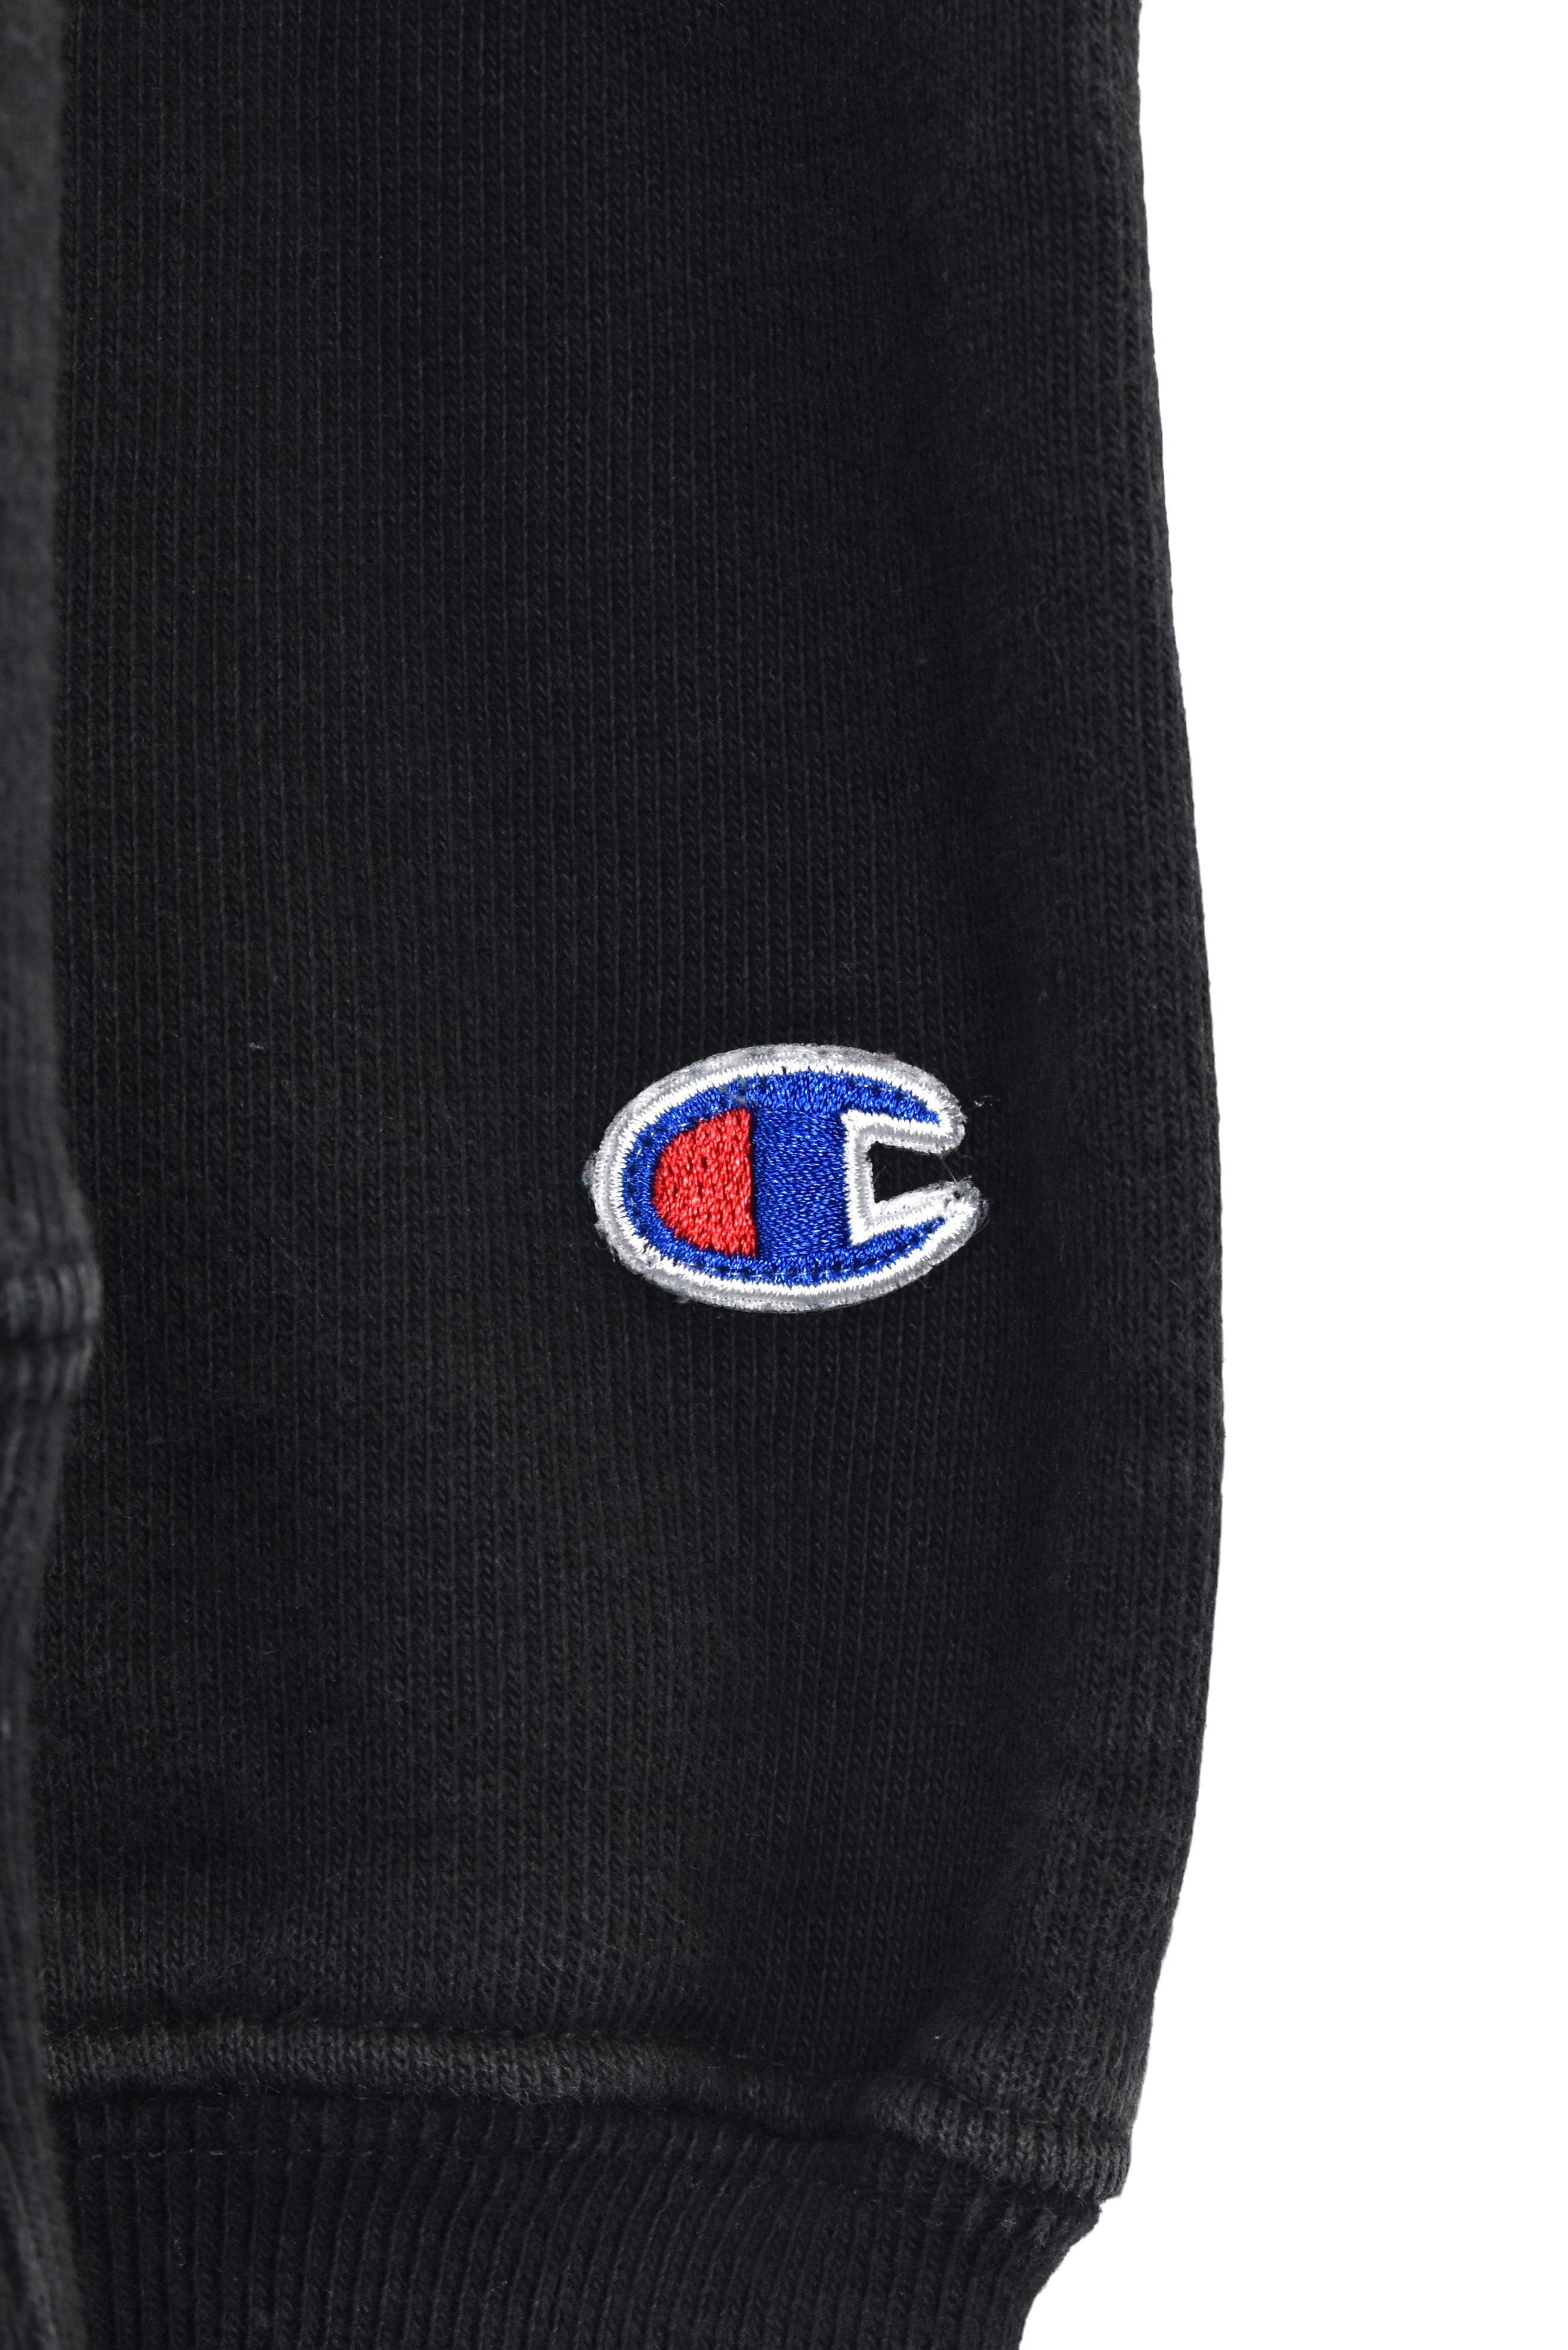 Modern Champion hoodie, black reverse weave embroidered sweatshirt - Medium